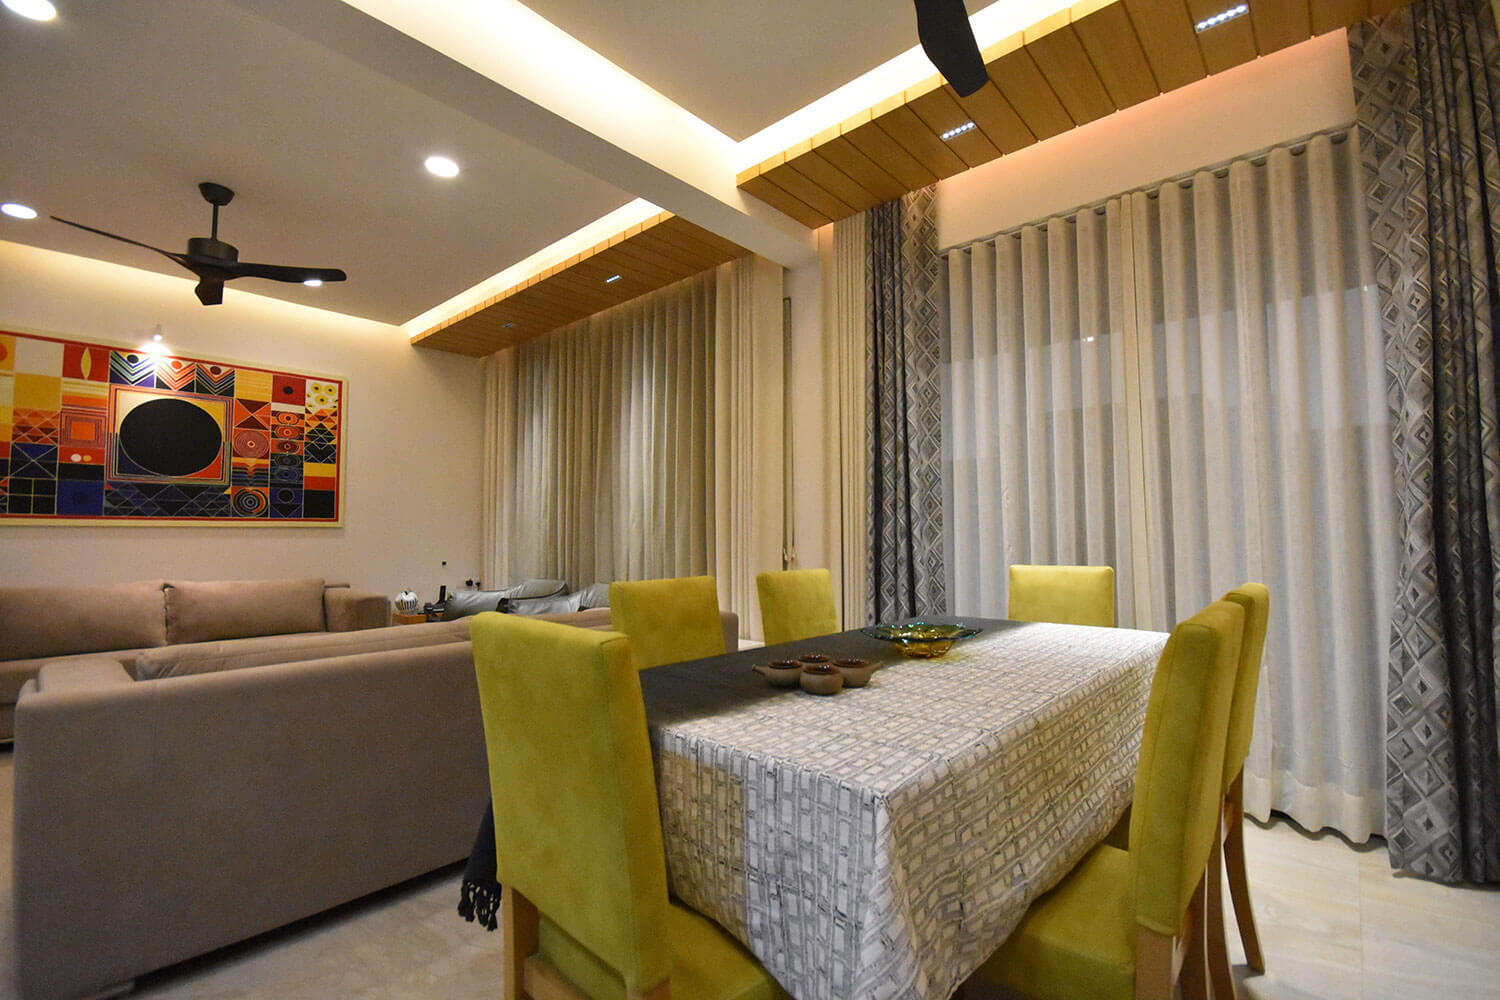 4 BHK Residence Interior at Gala Marvella - Devang Shah Architect